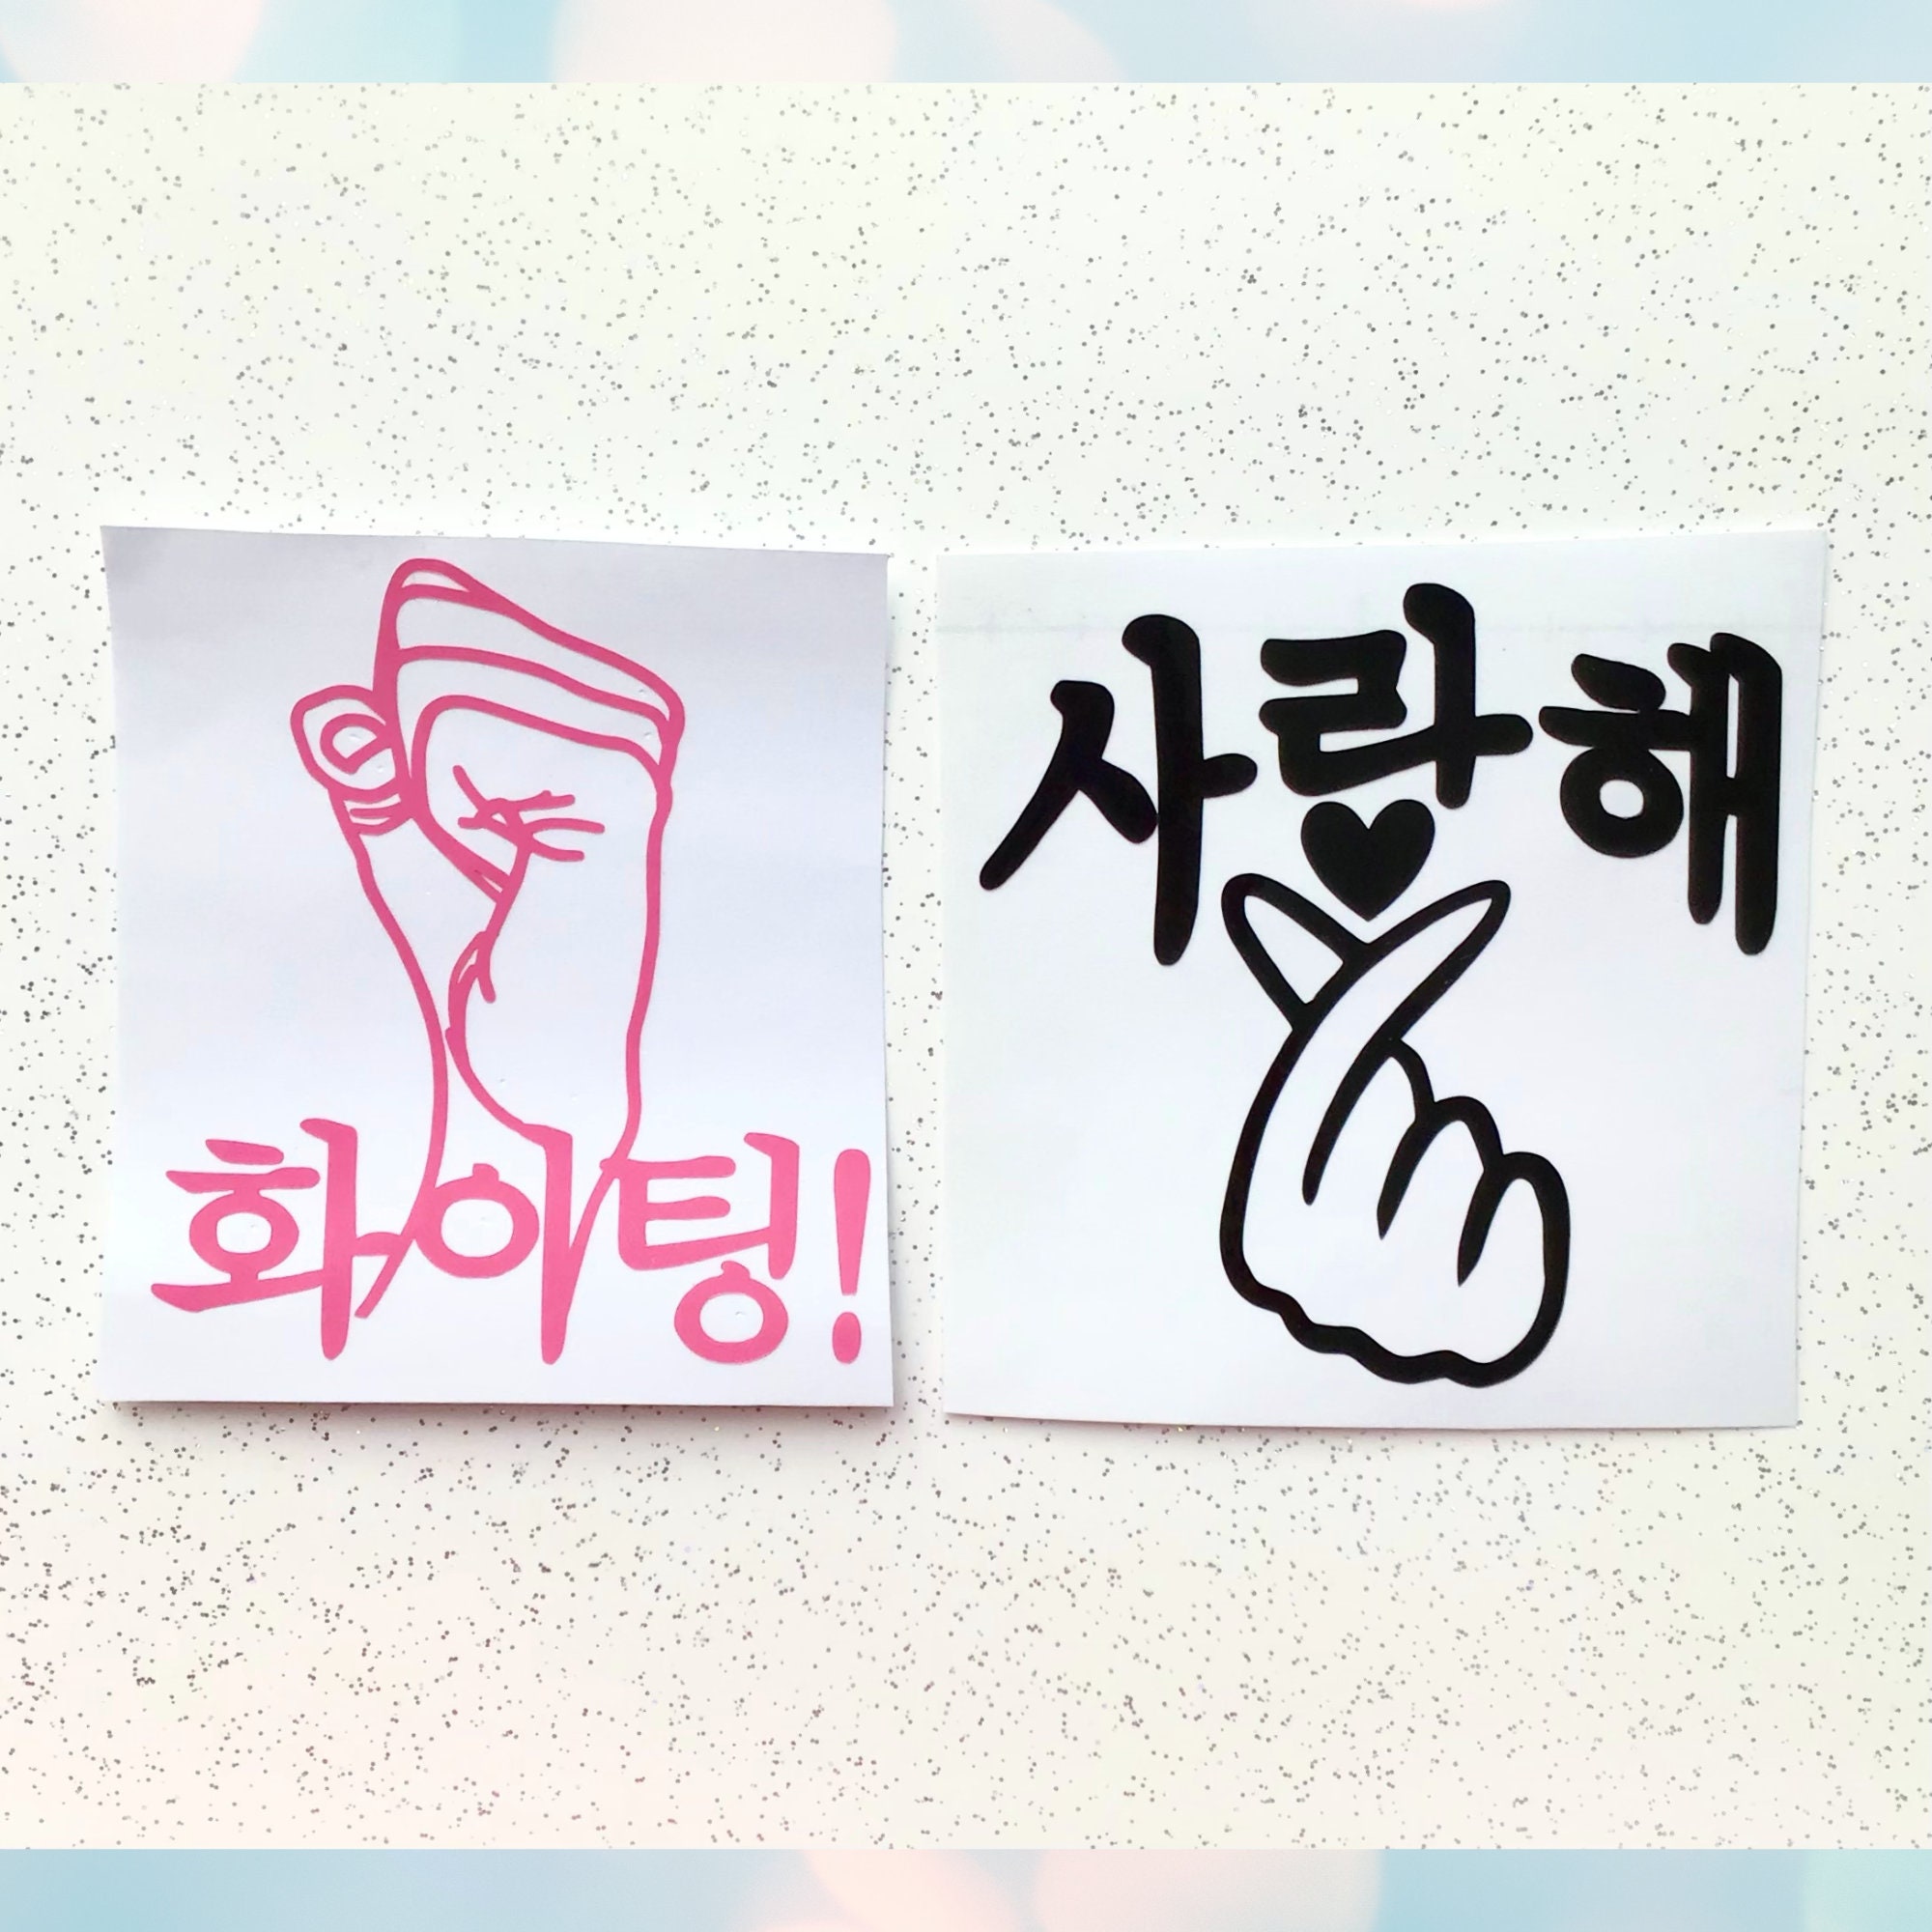 Fighting Hwaiting Kdrama Kpop Hangul Text Fan Art Print by Noirty Designs -  Fine Art America